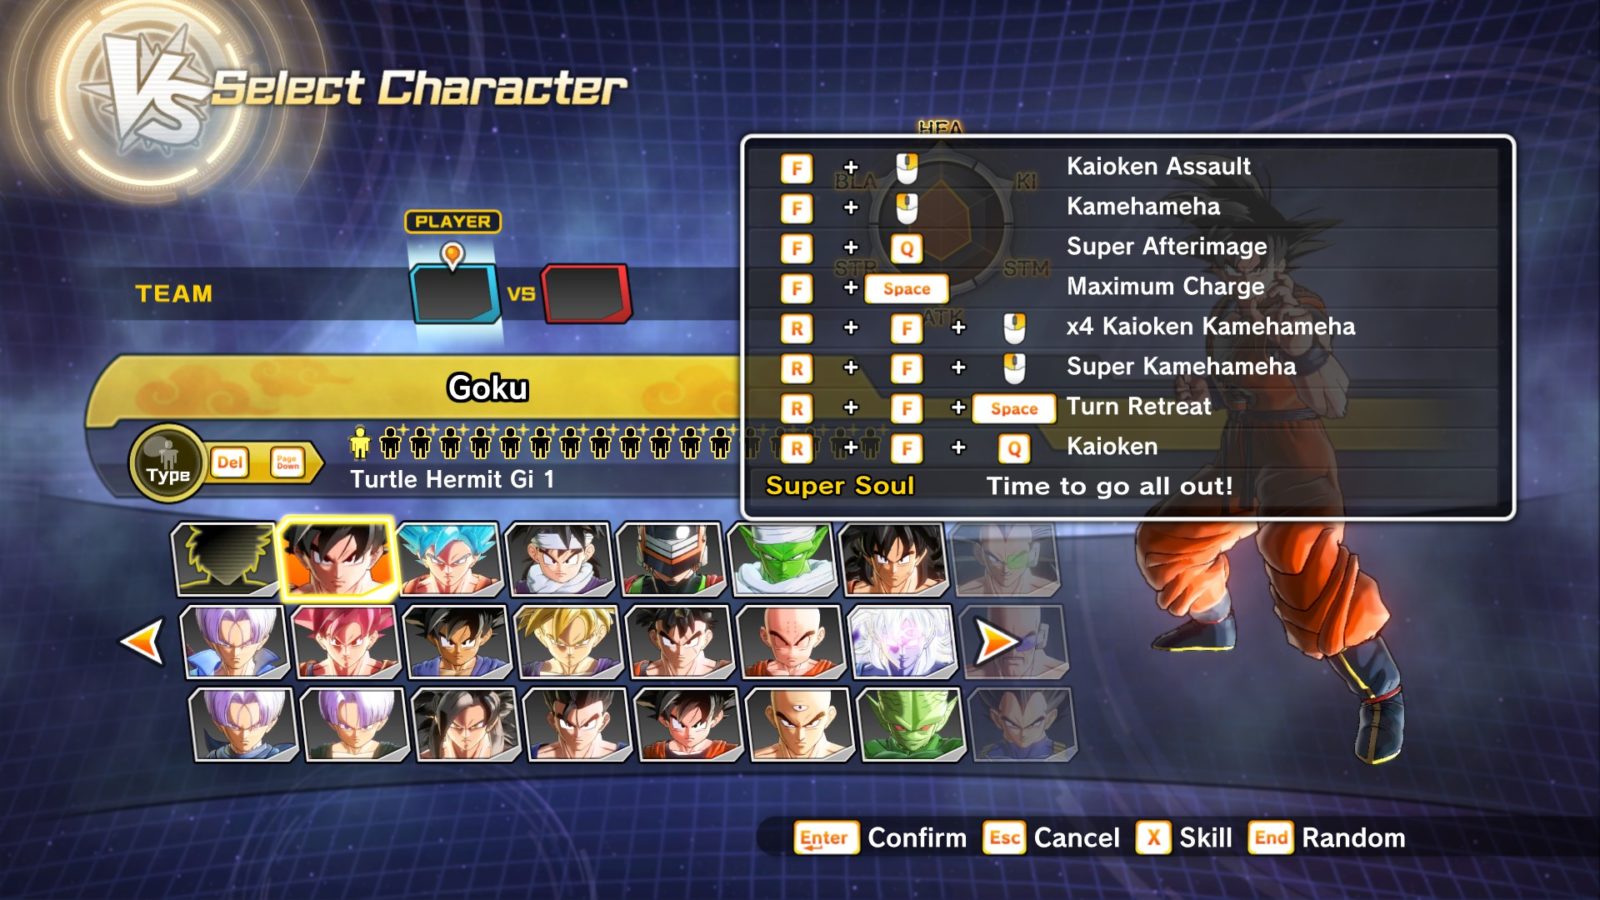 Dragon Ball Xenoverse 2: DLC Mod Packs (Addon Slots) [Roster